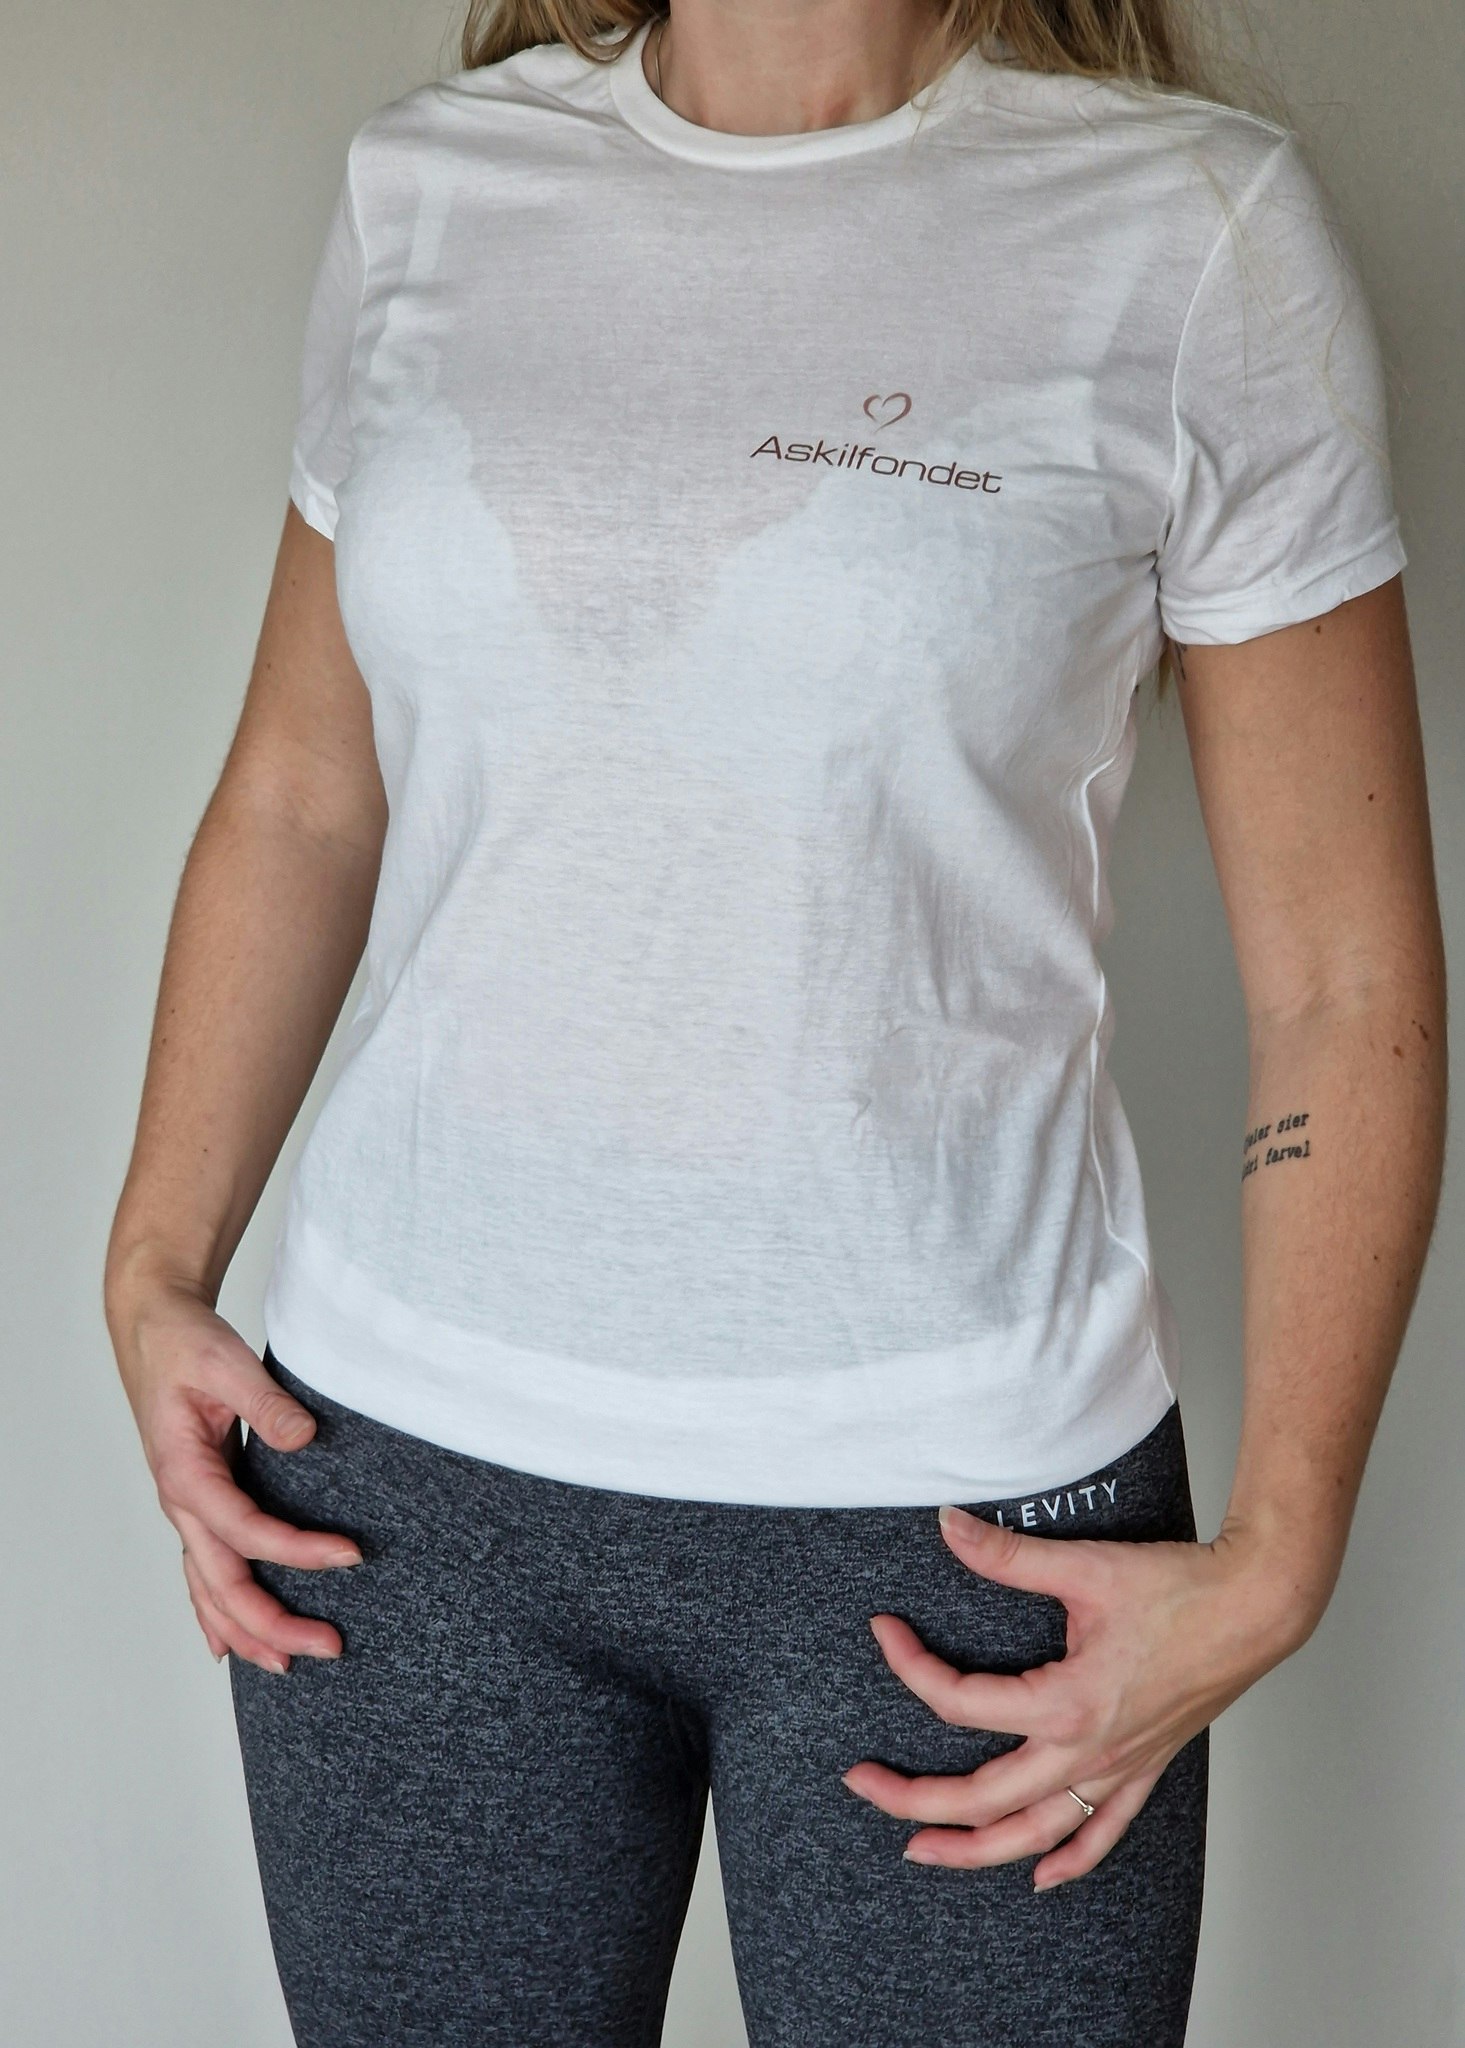 T-skjorte dame, liten logo - Askilfondet